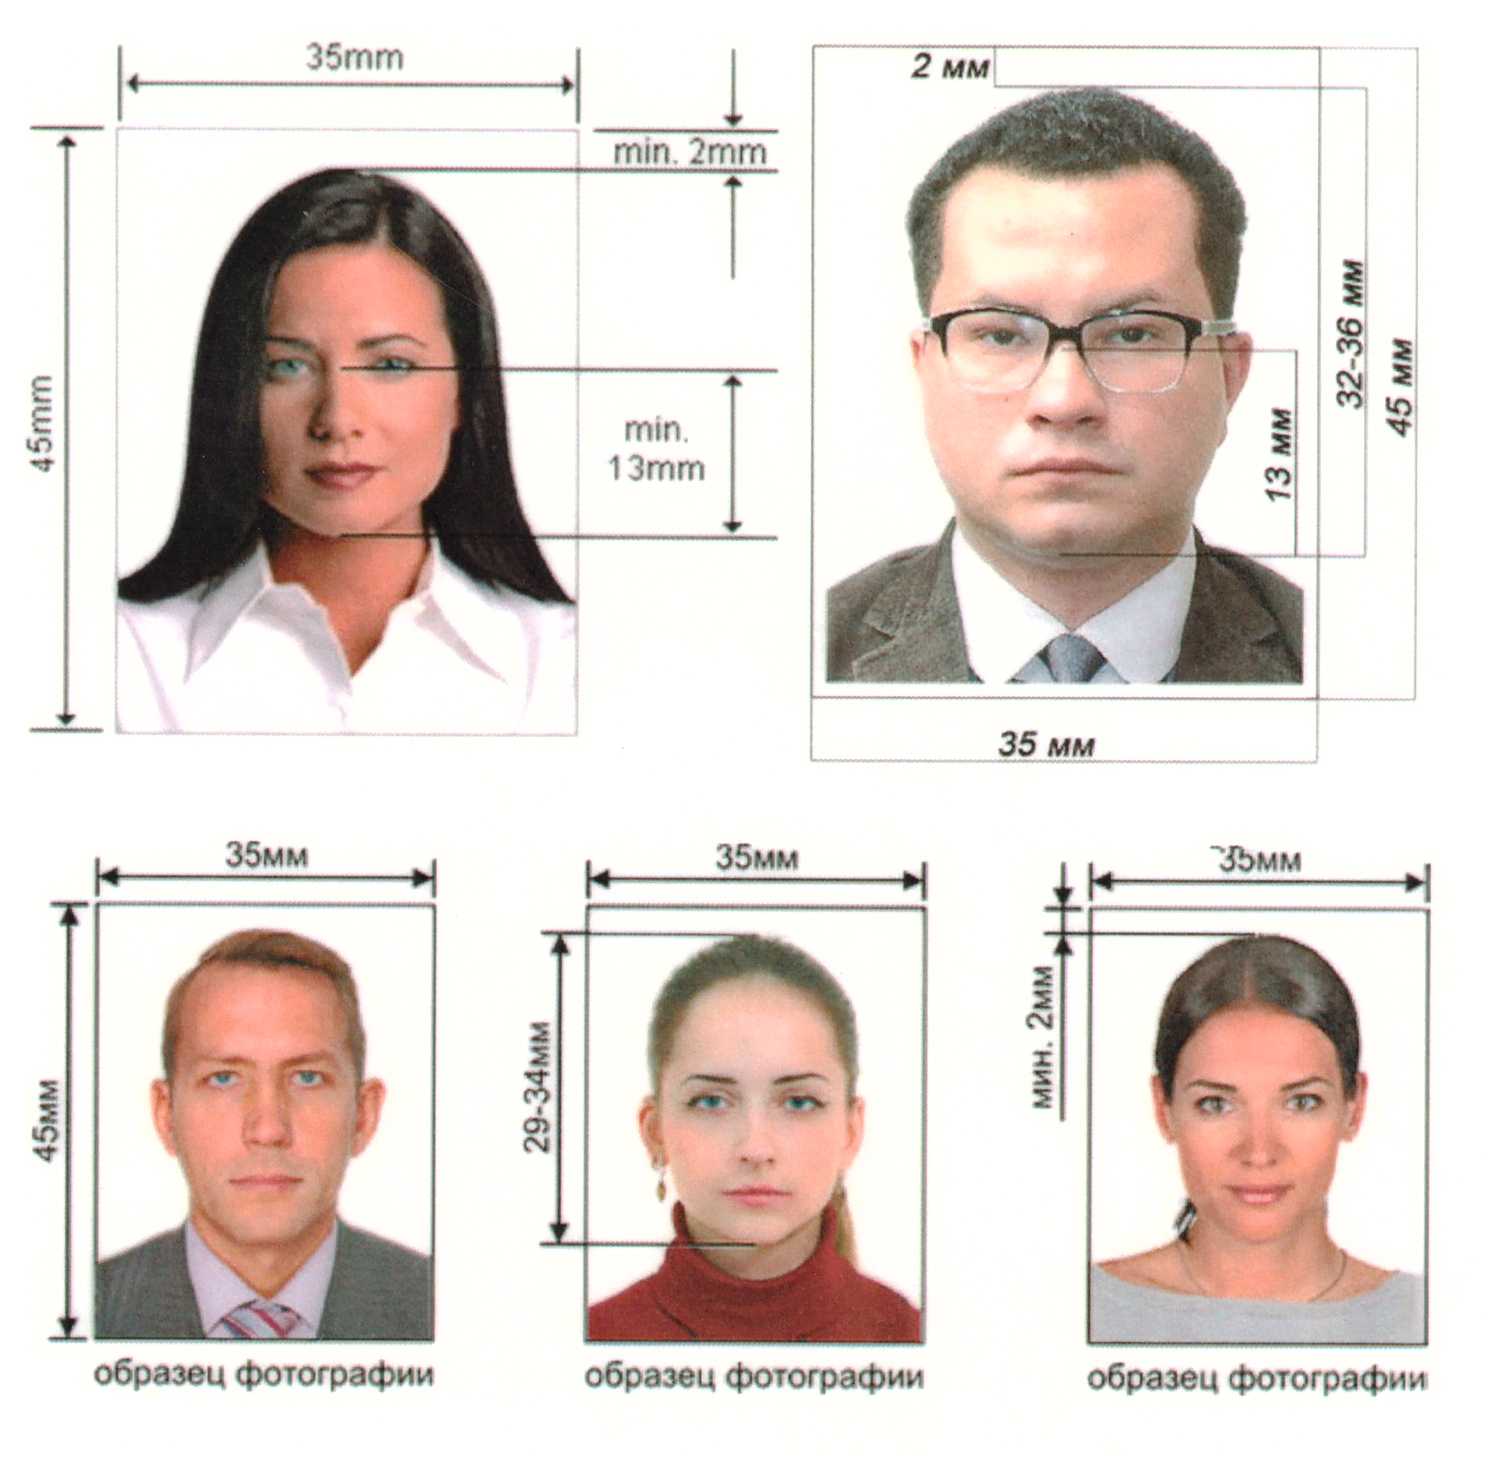 фото на паспорт коломенская